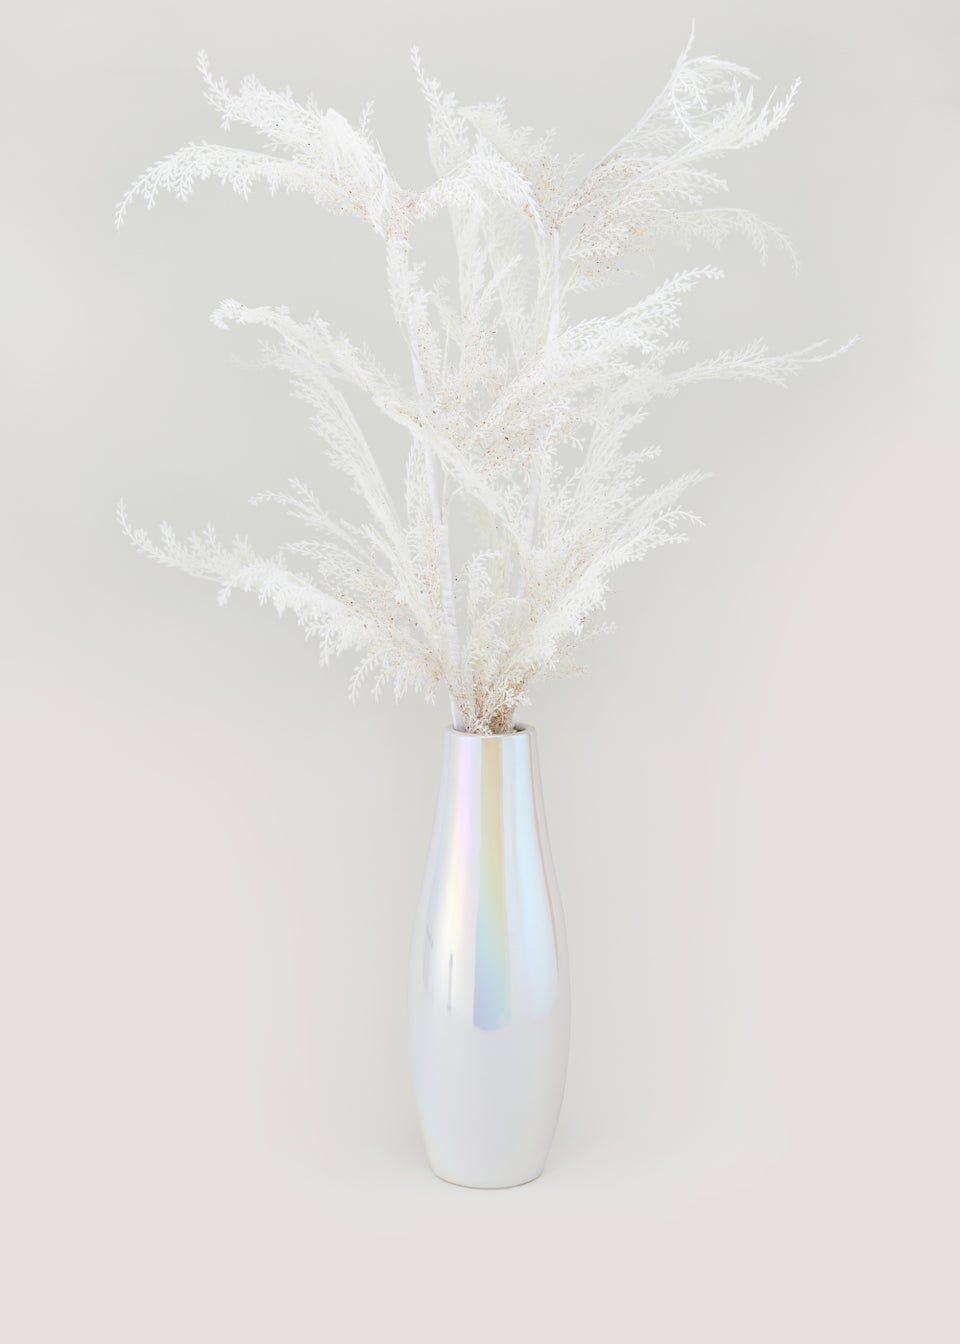 Faux Pampas in White Floor Vase (104cm x 50cm x 48cm)